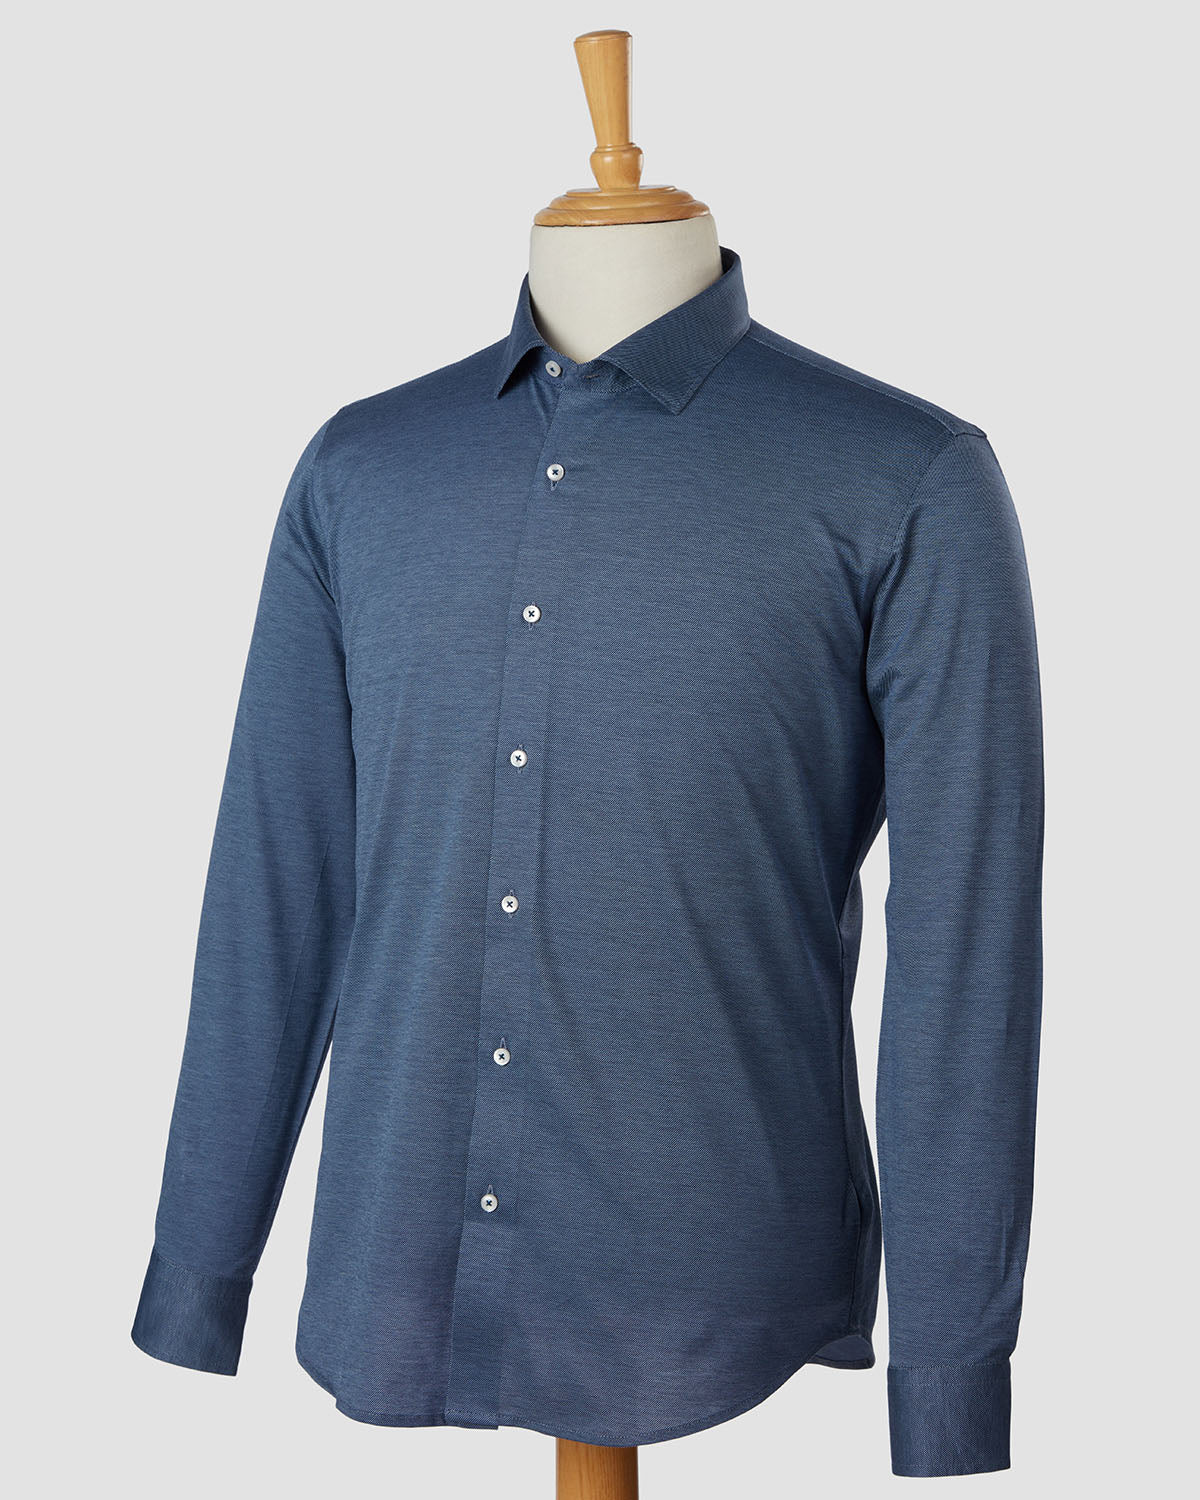 Bombay Shirt Company - Lazulite Knit Shirt